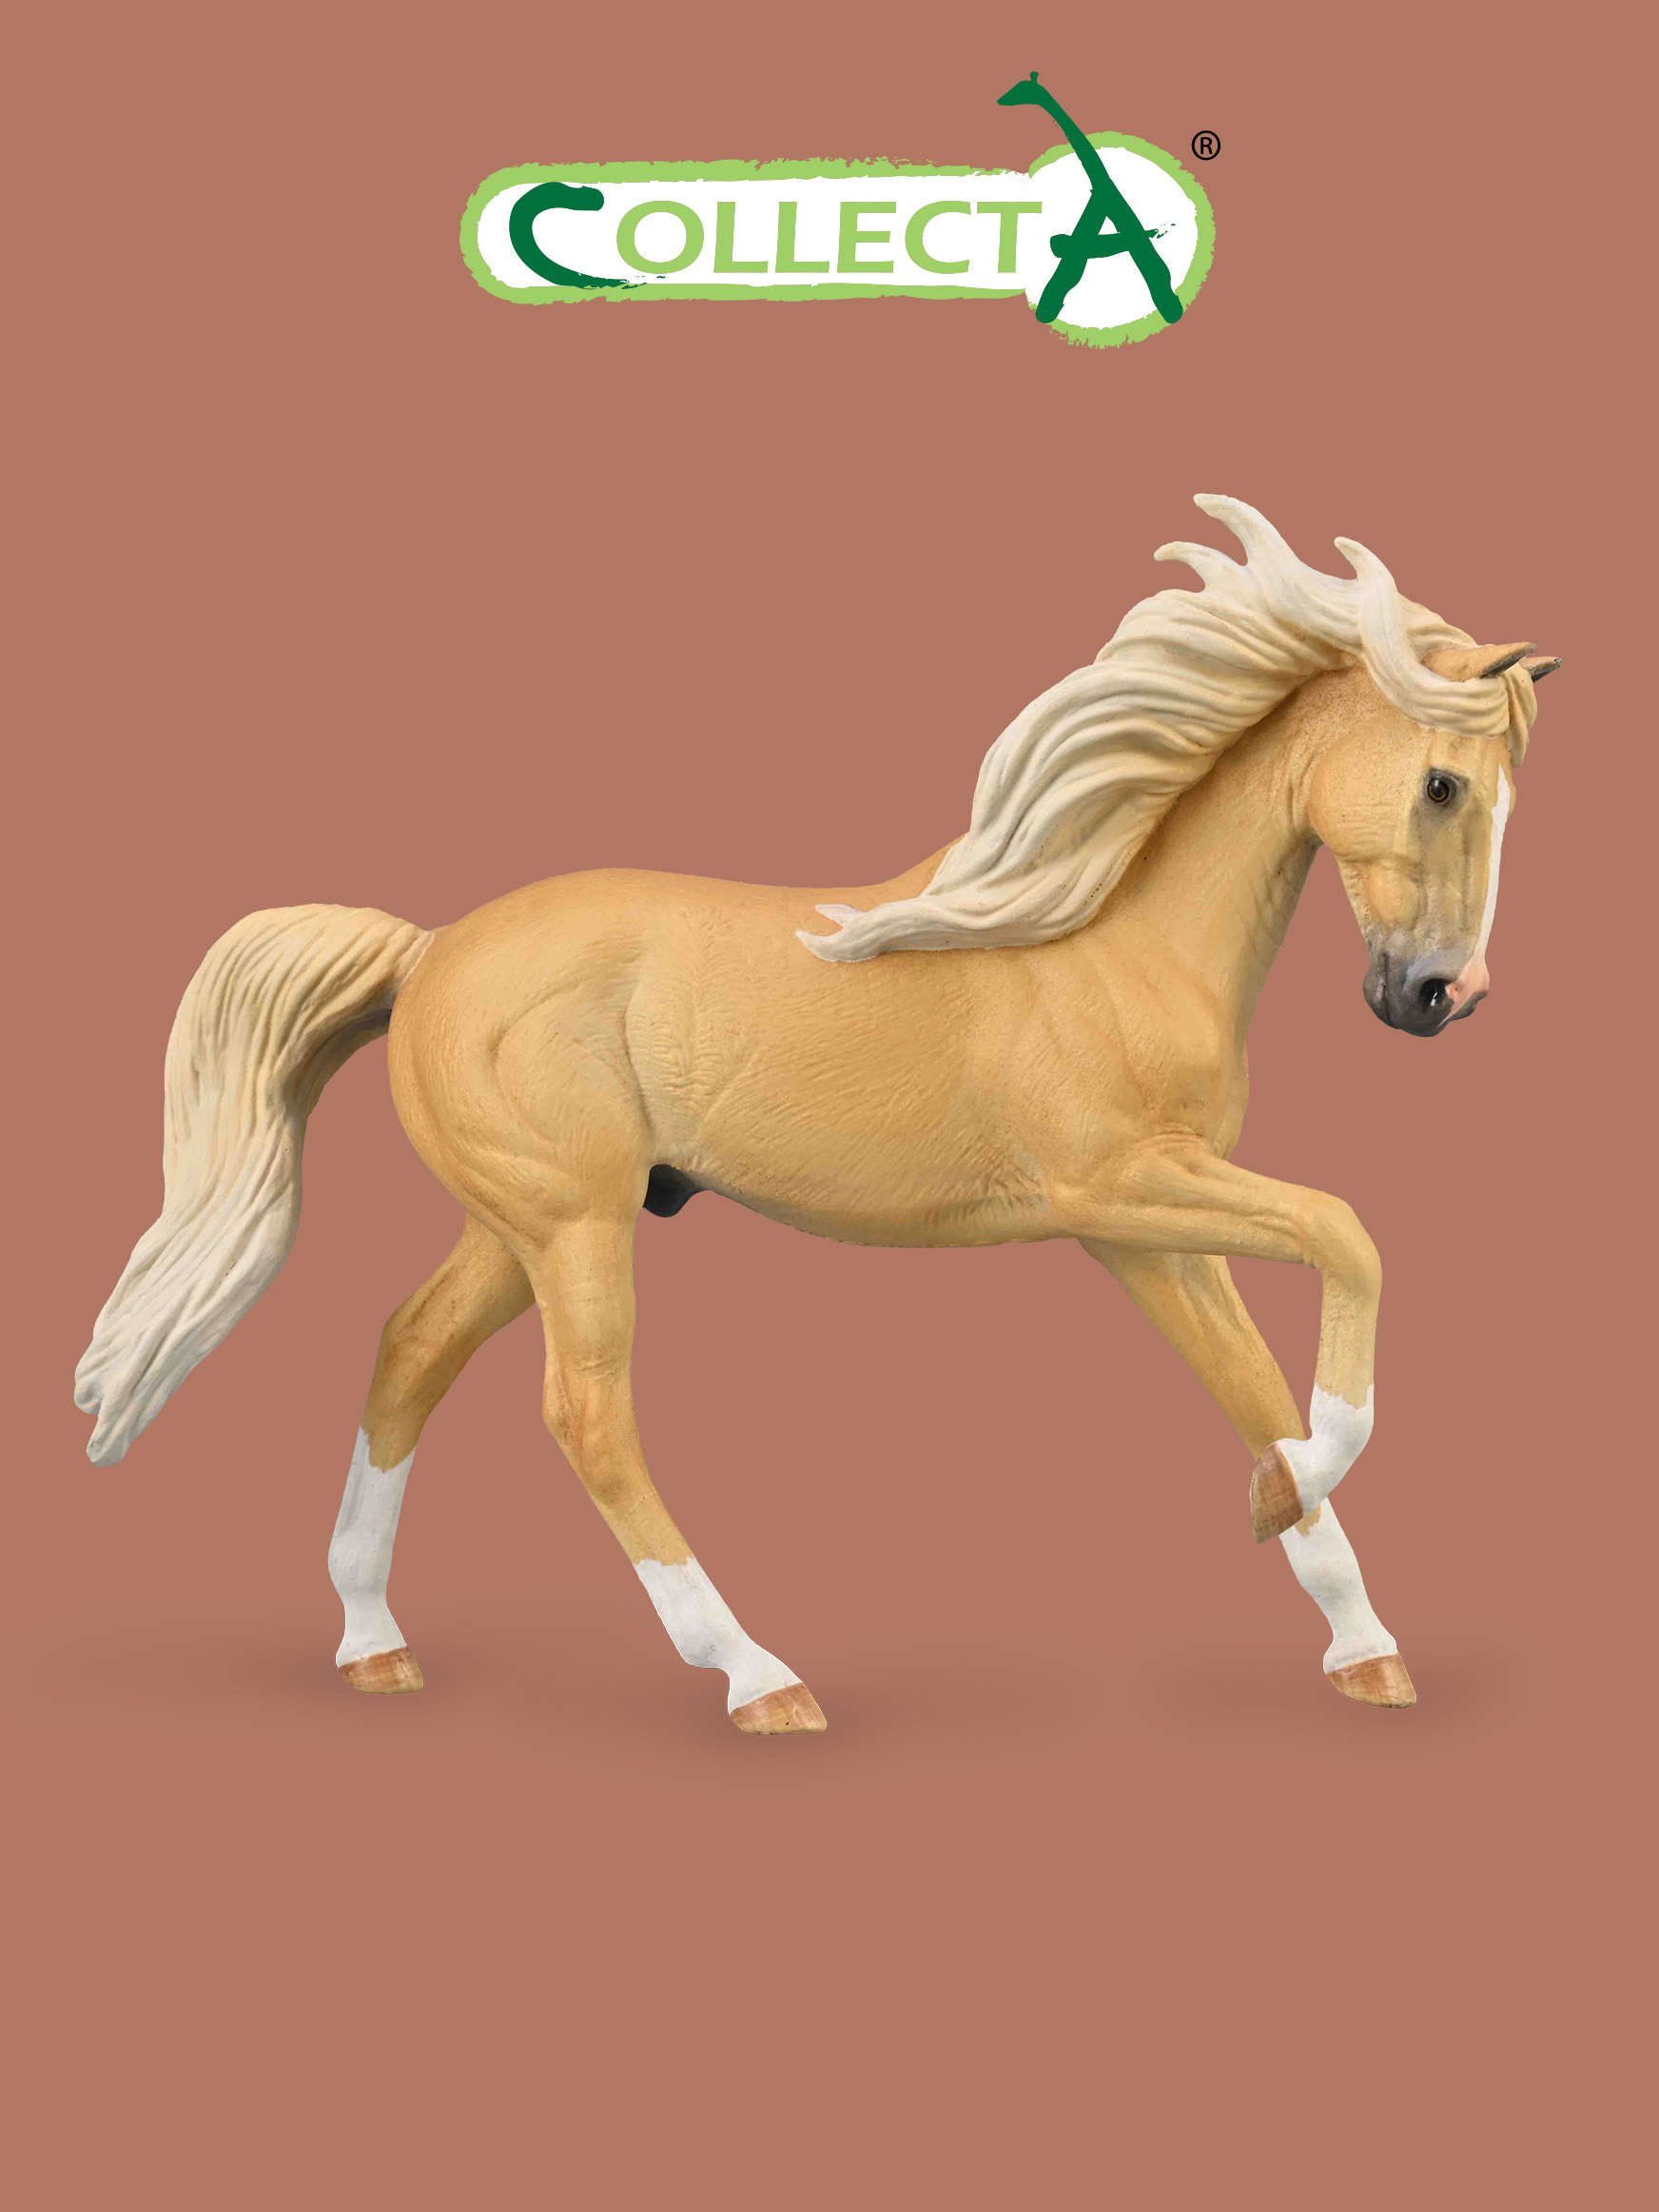 Фигурка Collecta животного Лошадь Андалузский жеребец - Паломино фигурка collecta андалузский жеребец